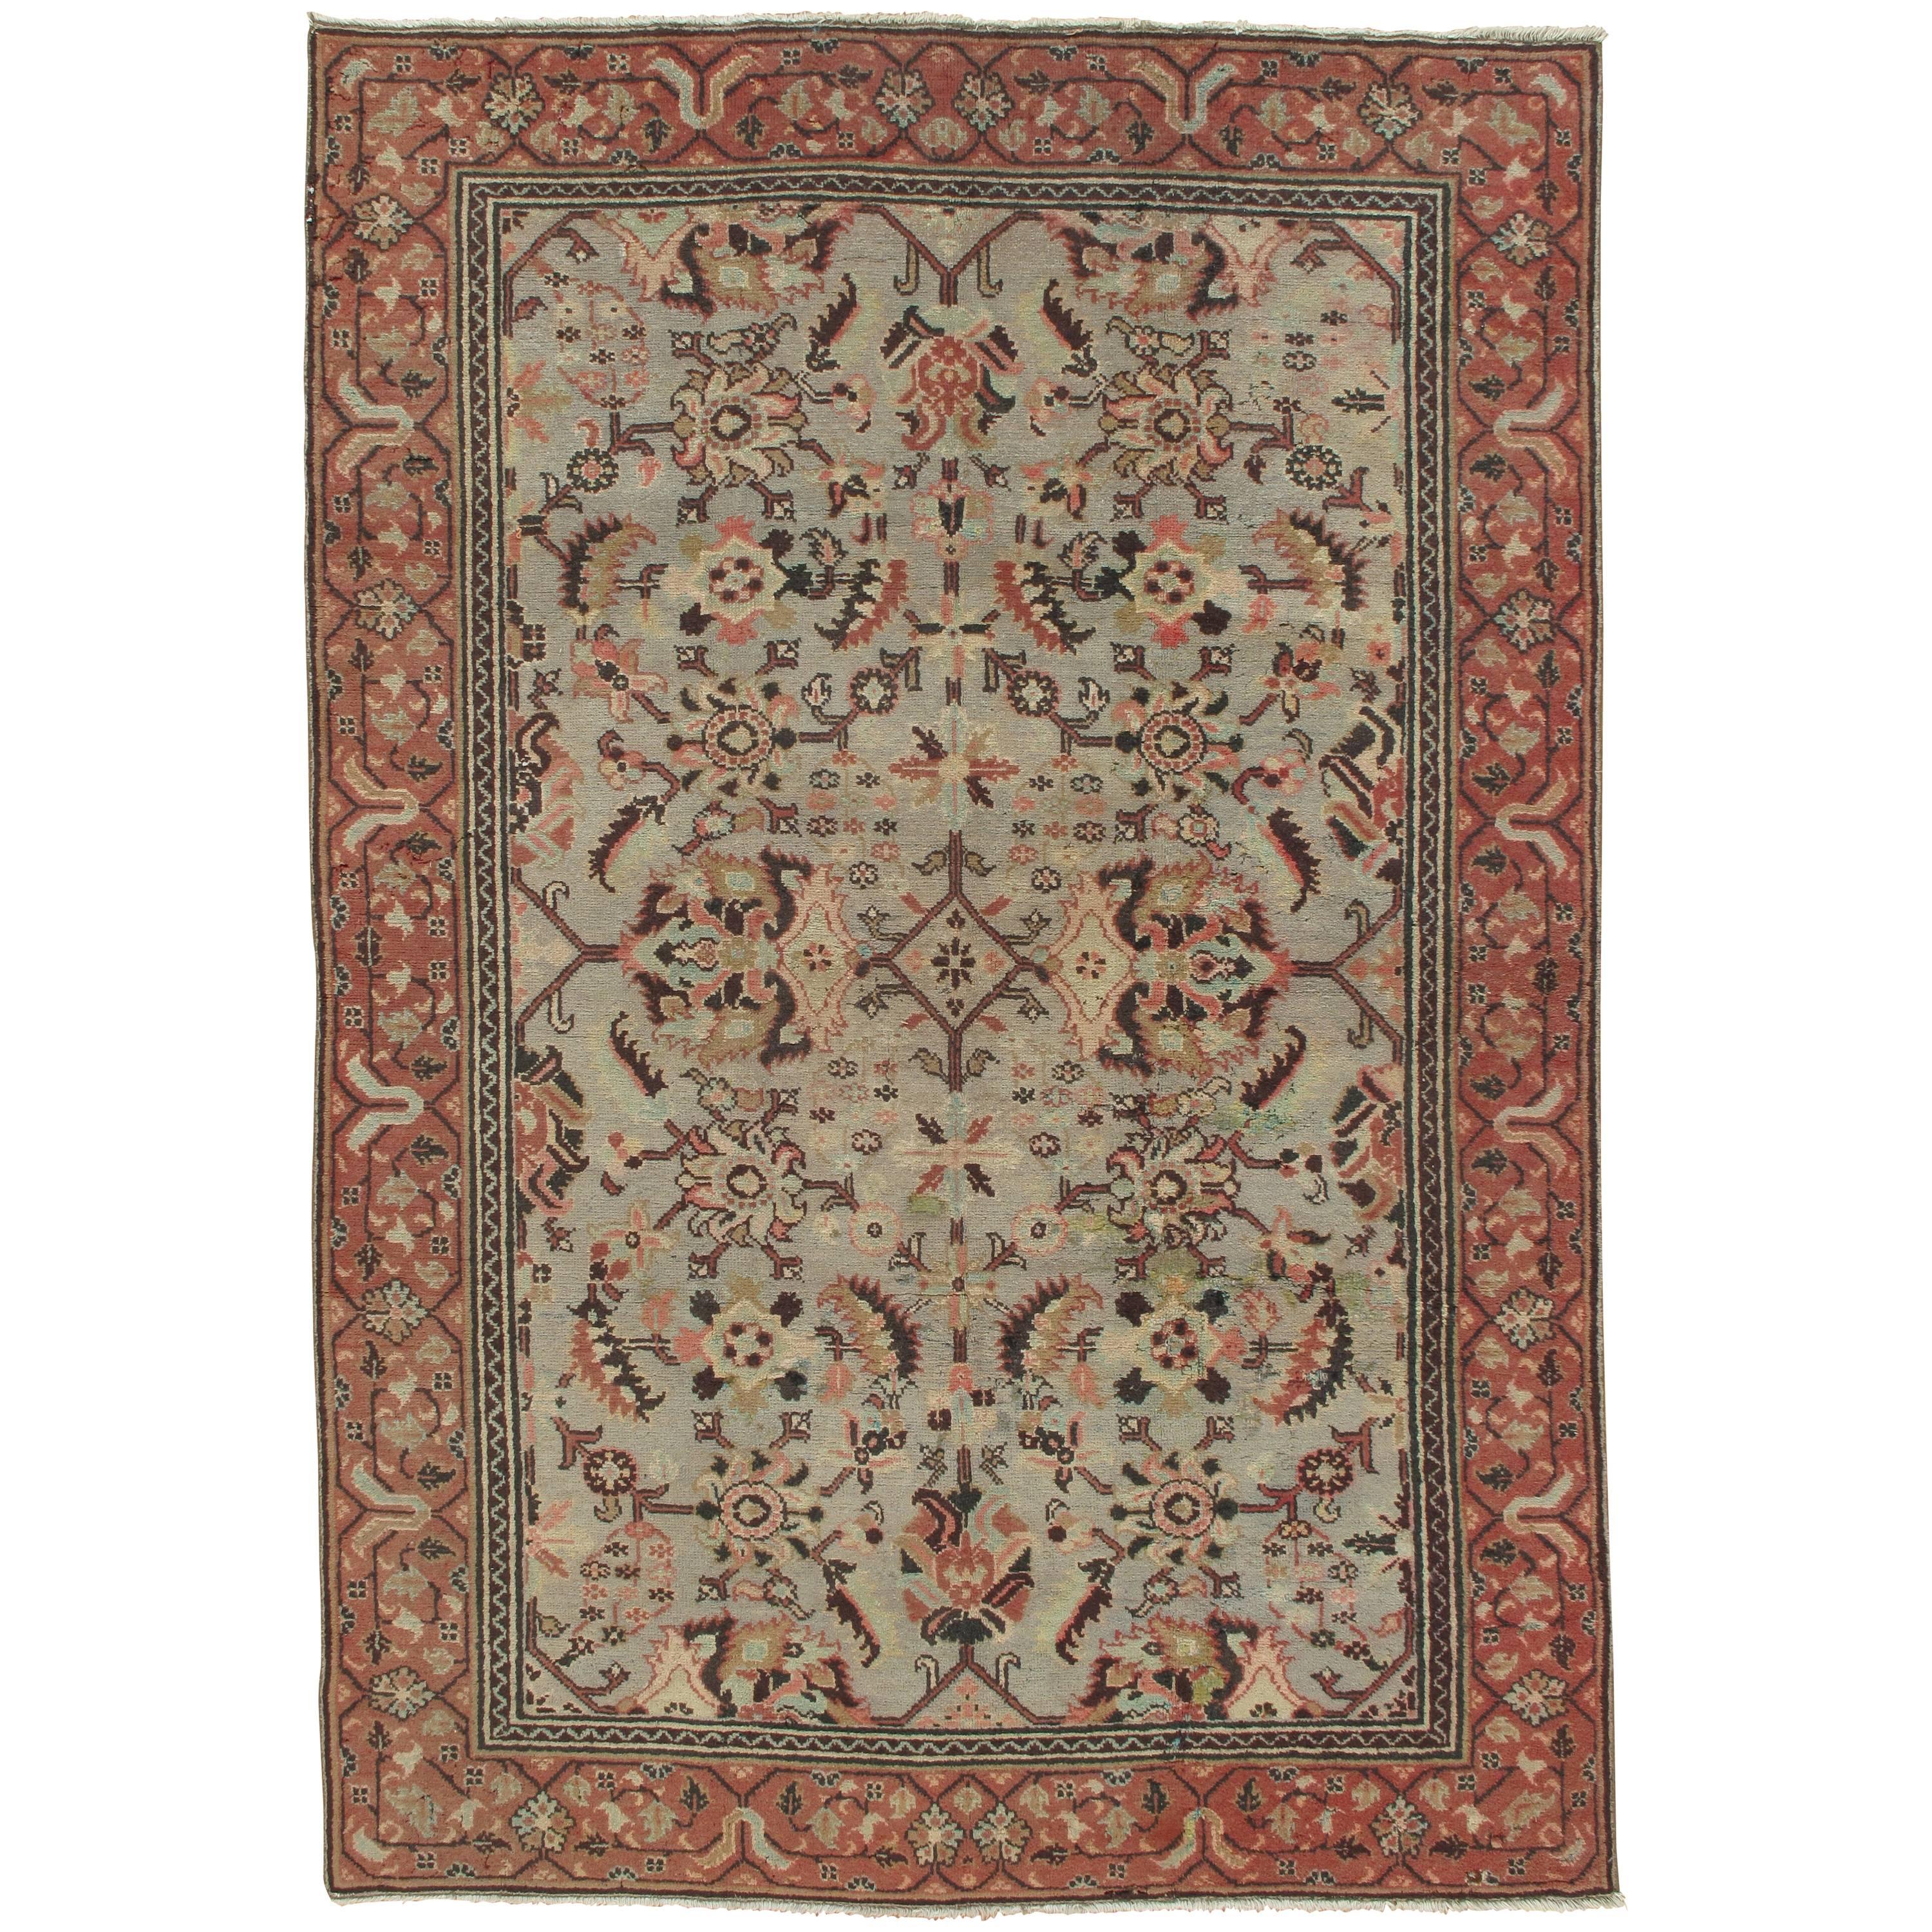 Antique Oushak Carpet, Handmade Oriental Rug, Pale blue, Coral Taupe, Cream Fine